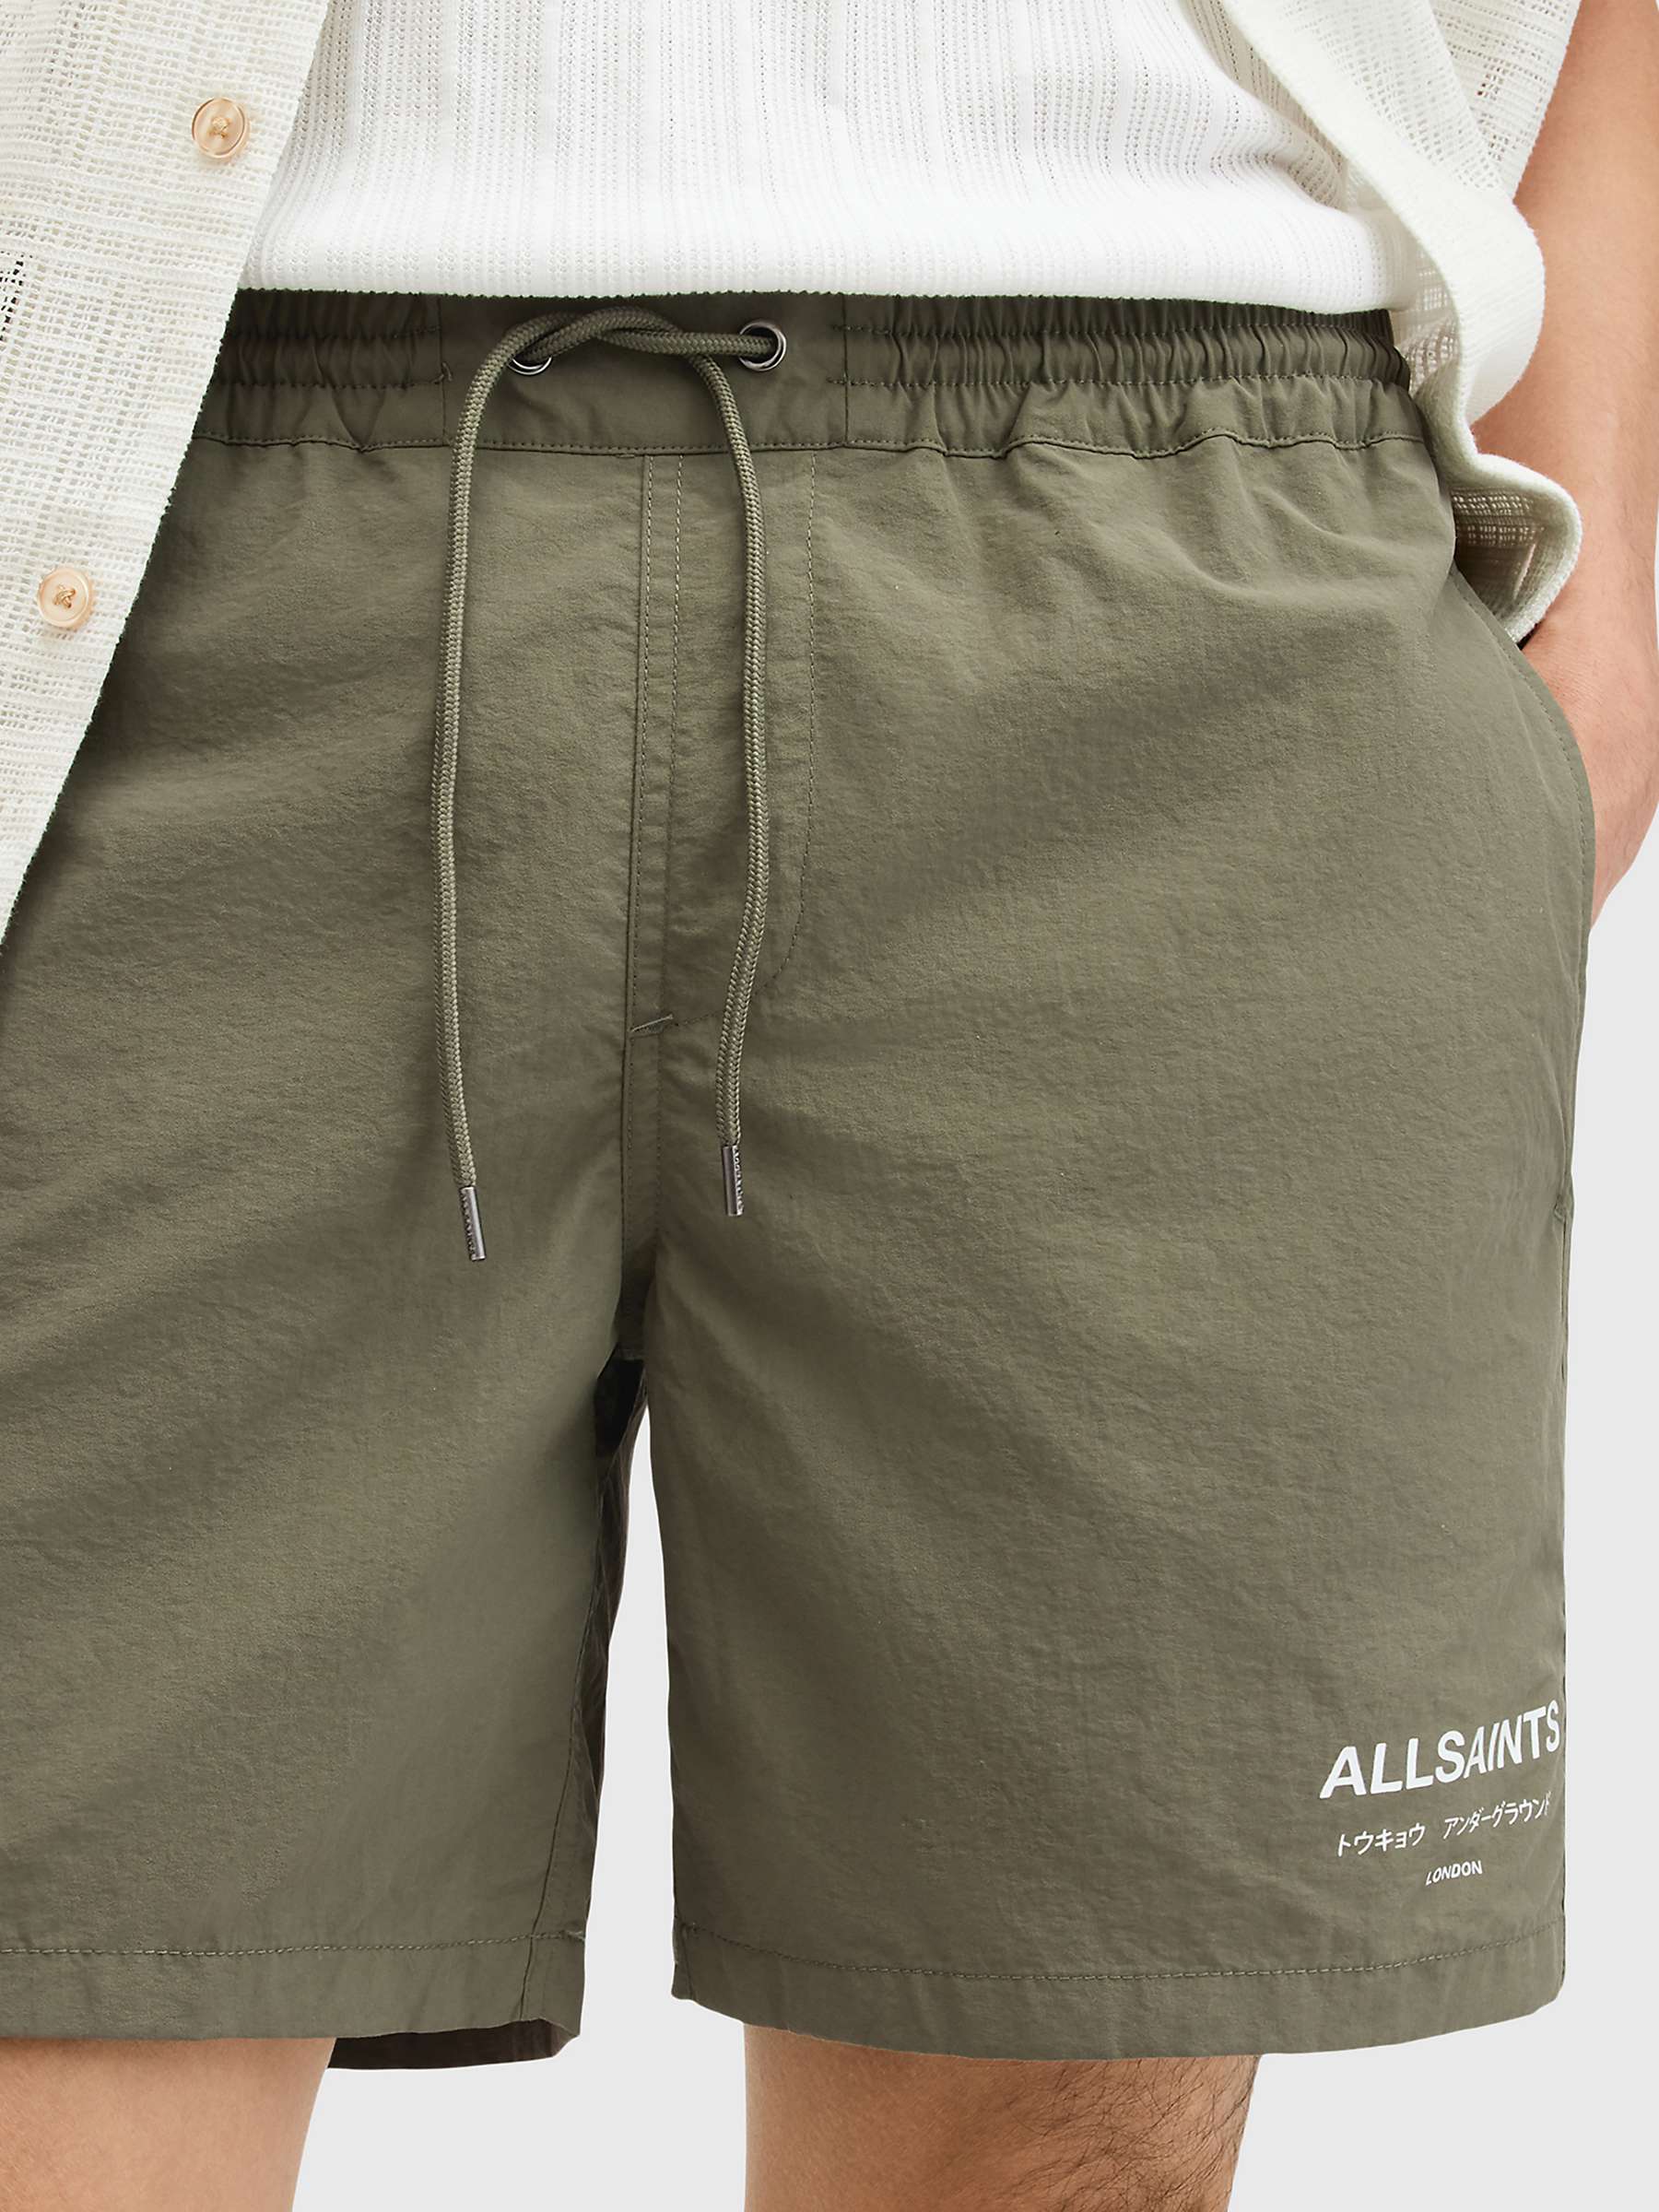 Buy AllSaints Lani Swim Shorts, Pack of 2, Green Online at johnlewis.com